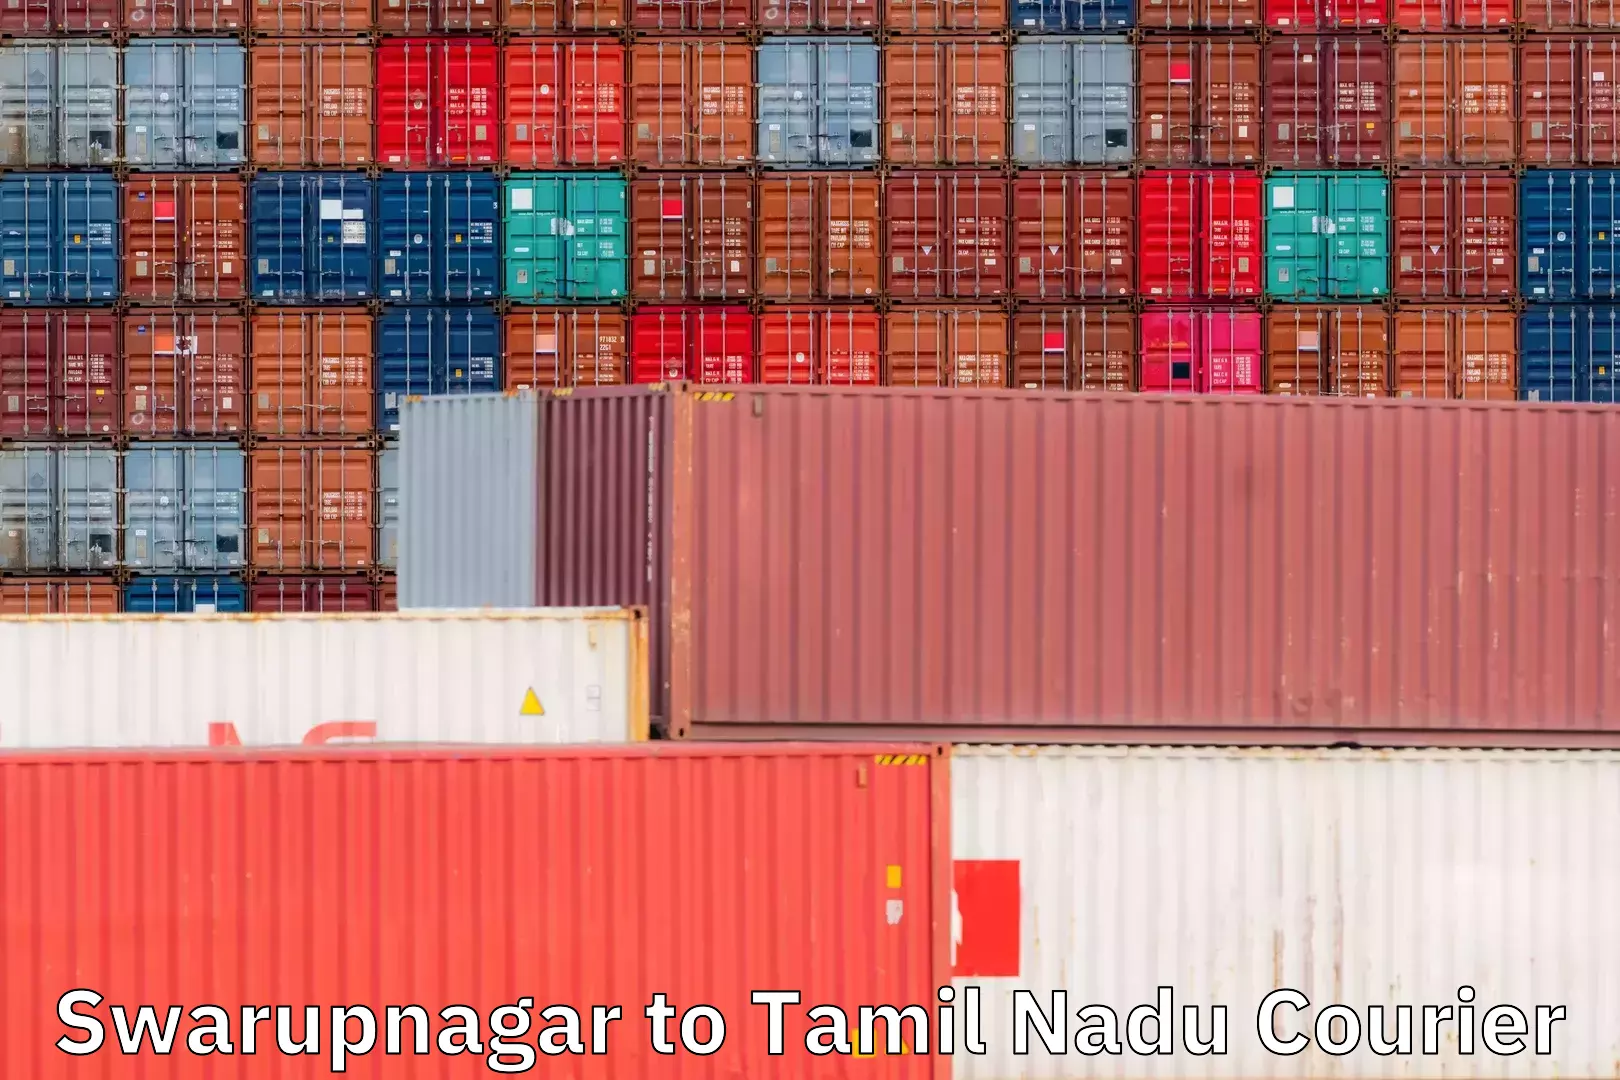 Efficient logistics management Swarupnagar to Tamil Nadu